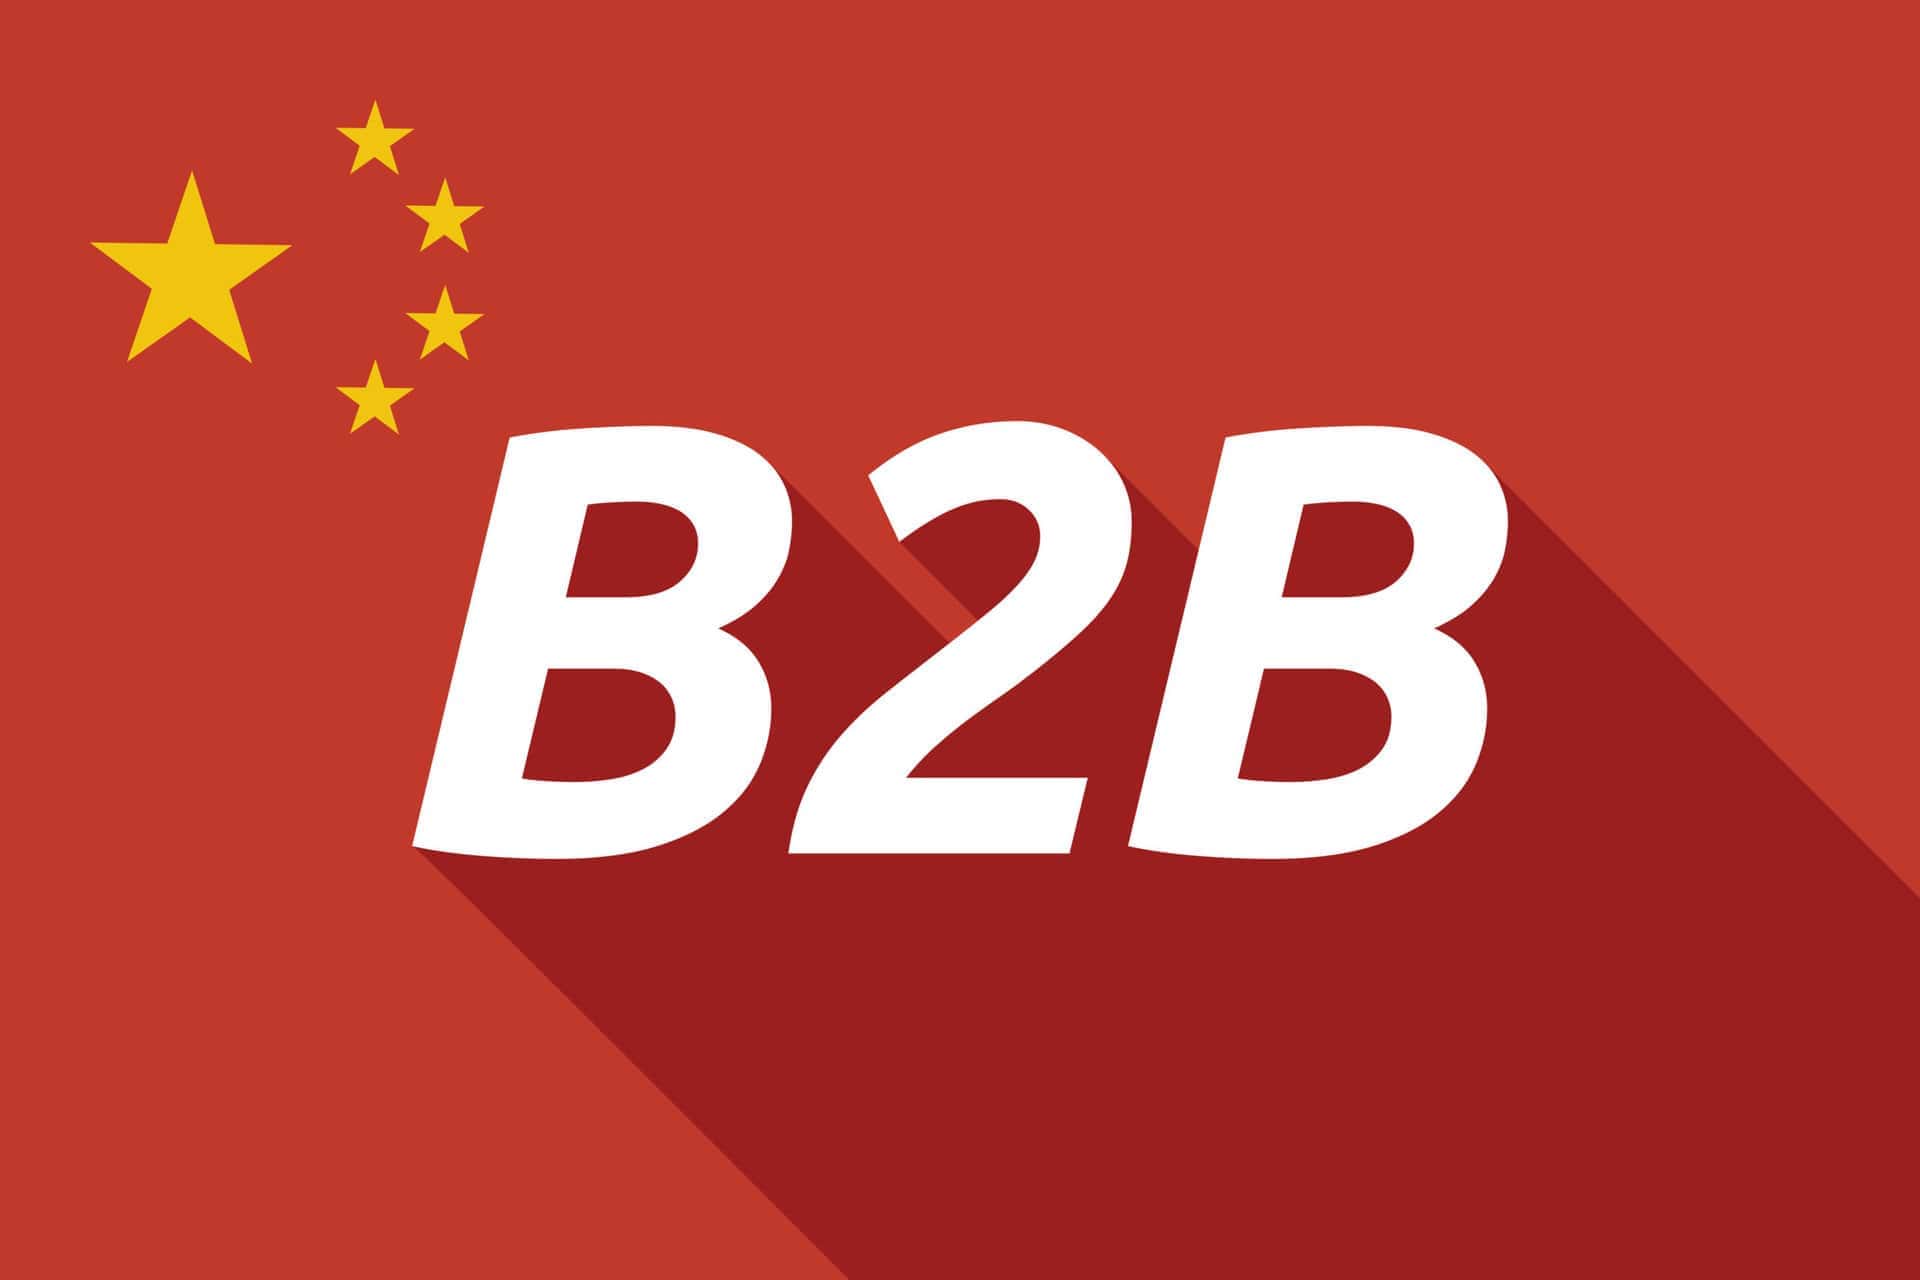 NBH-opas: B2B Marketing Strategy for China